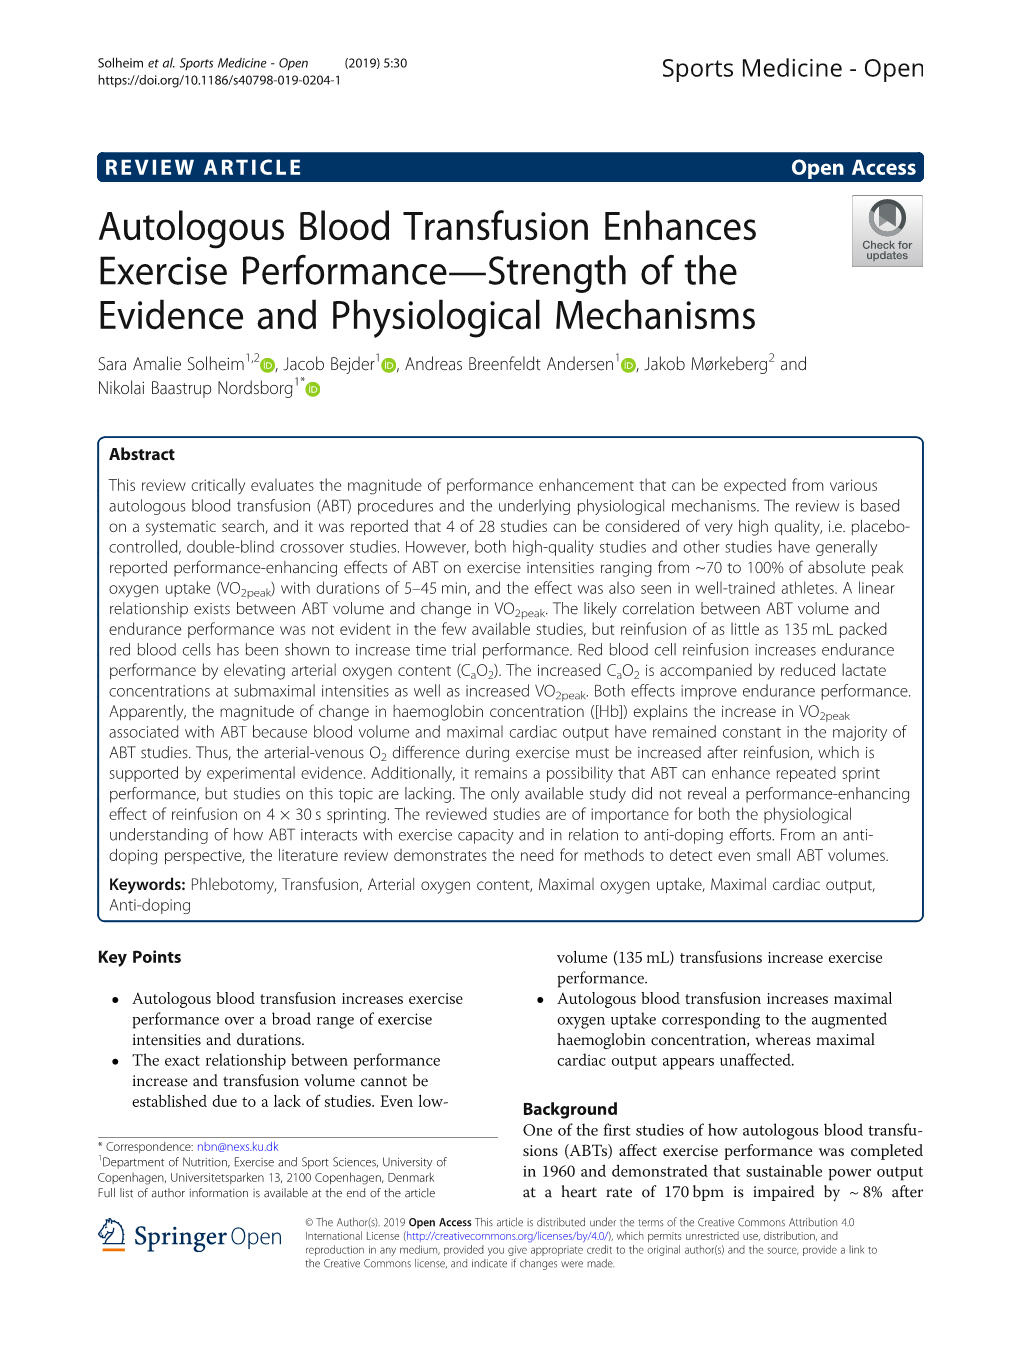 Autologous Blood Transfusion Enhances Exercise Performance